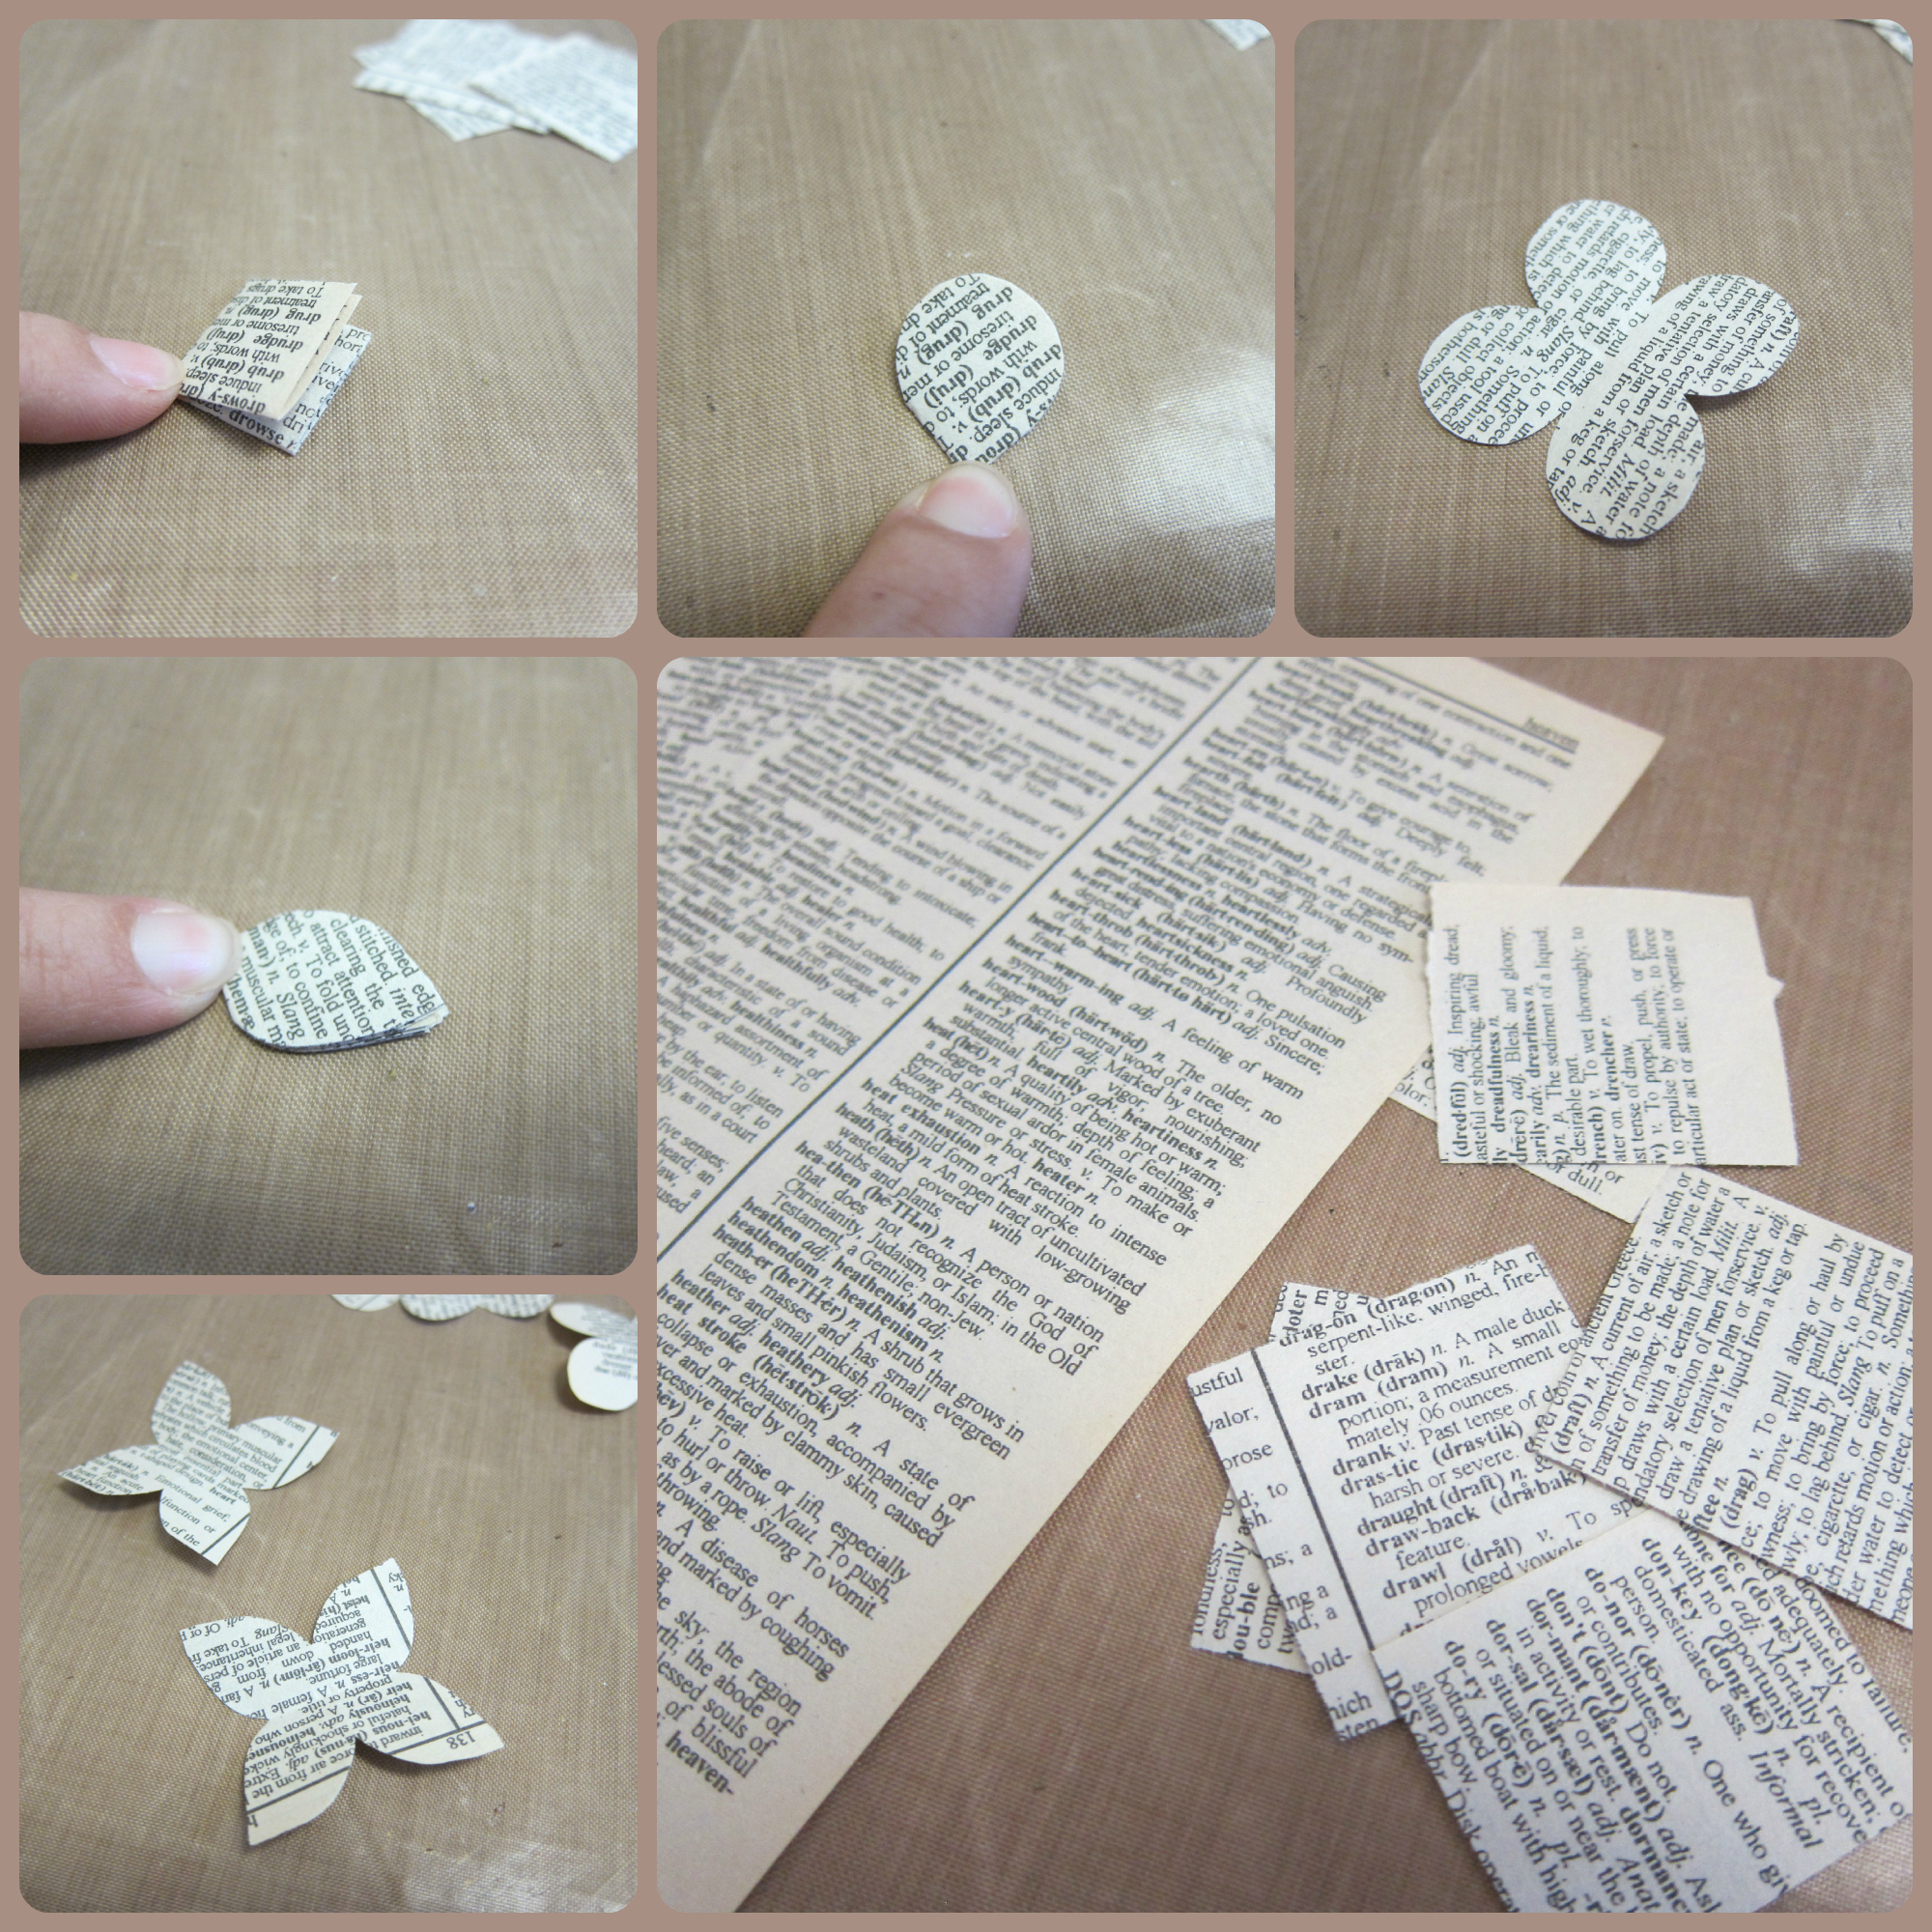 Pin on DIY Paper Crafts